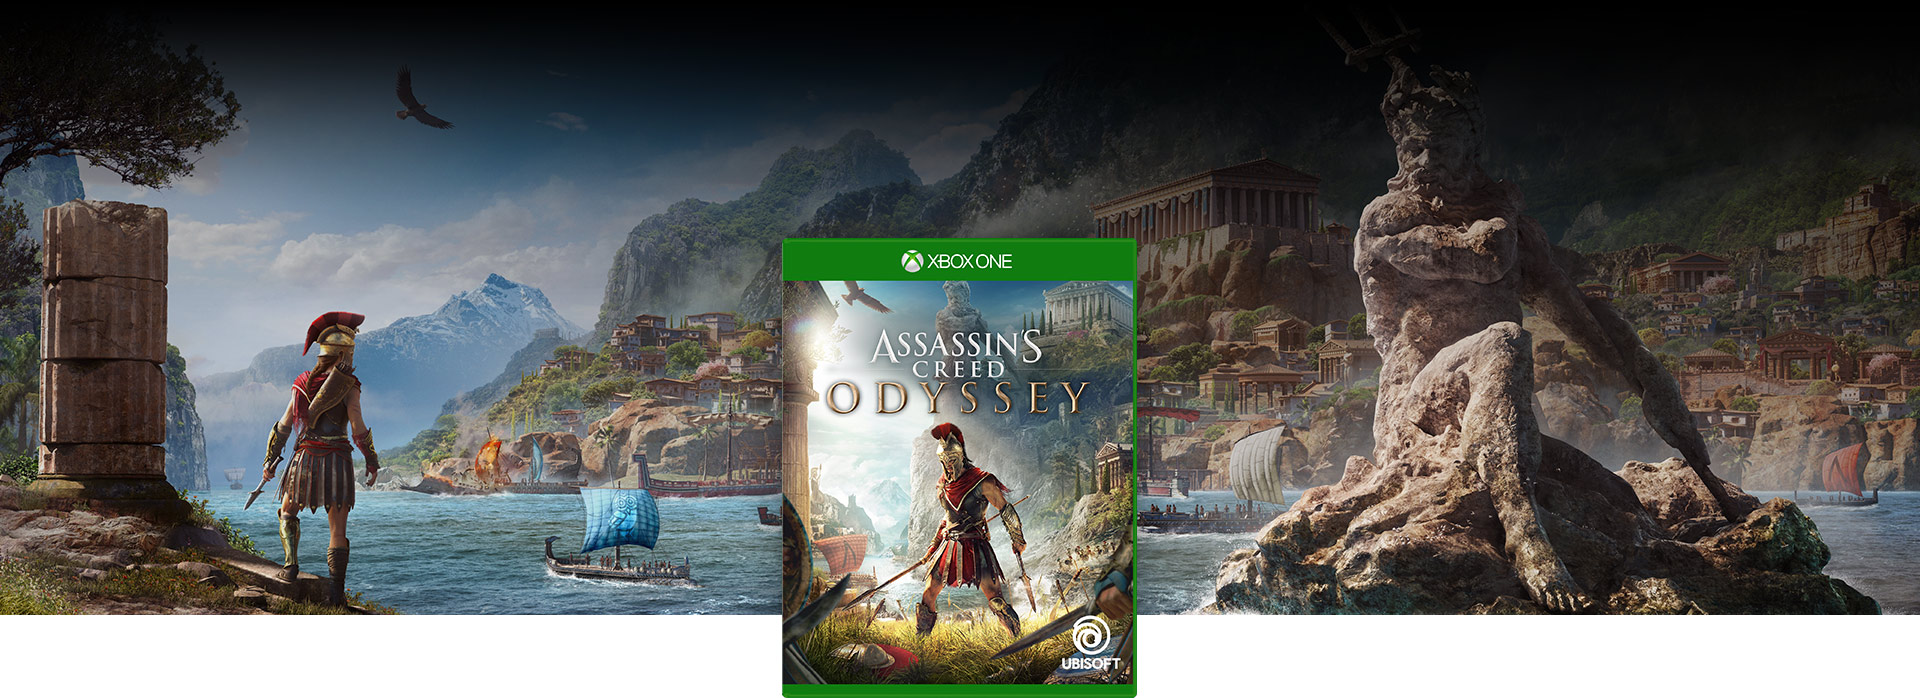 《Assassin’s Creed Odyssey》产品图像， 波塞冬的雕像坐落在爱琴海上